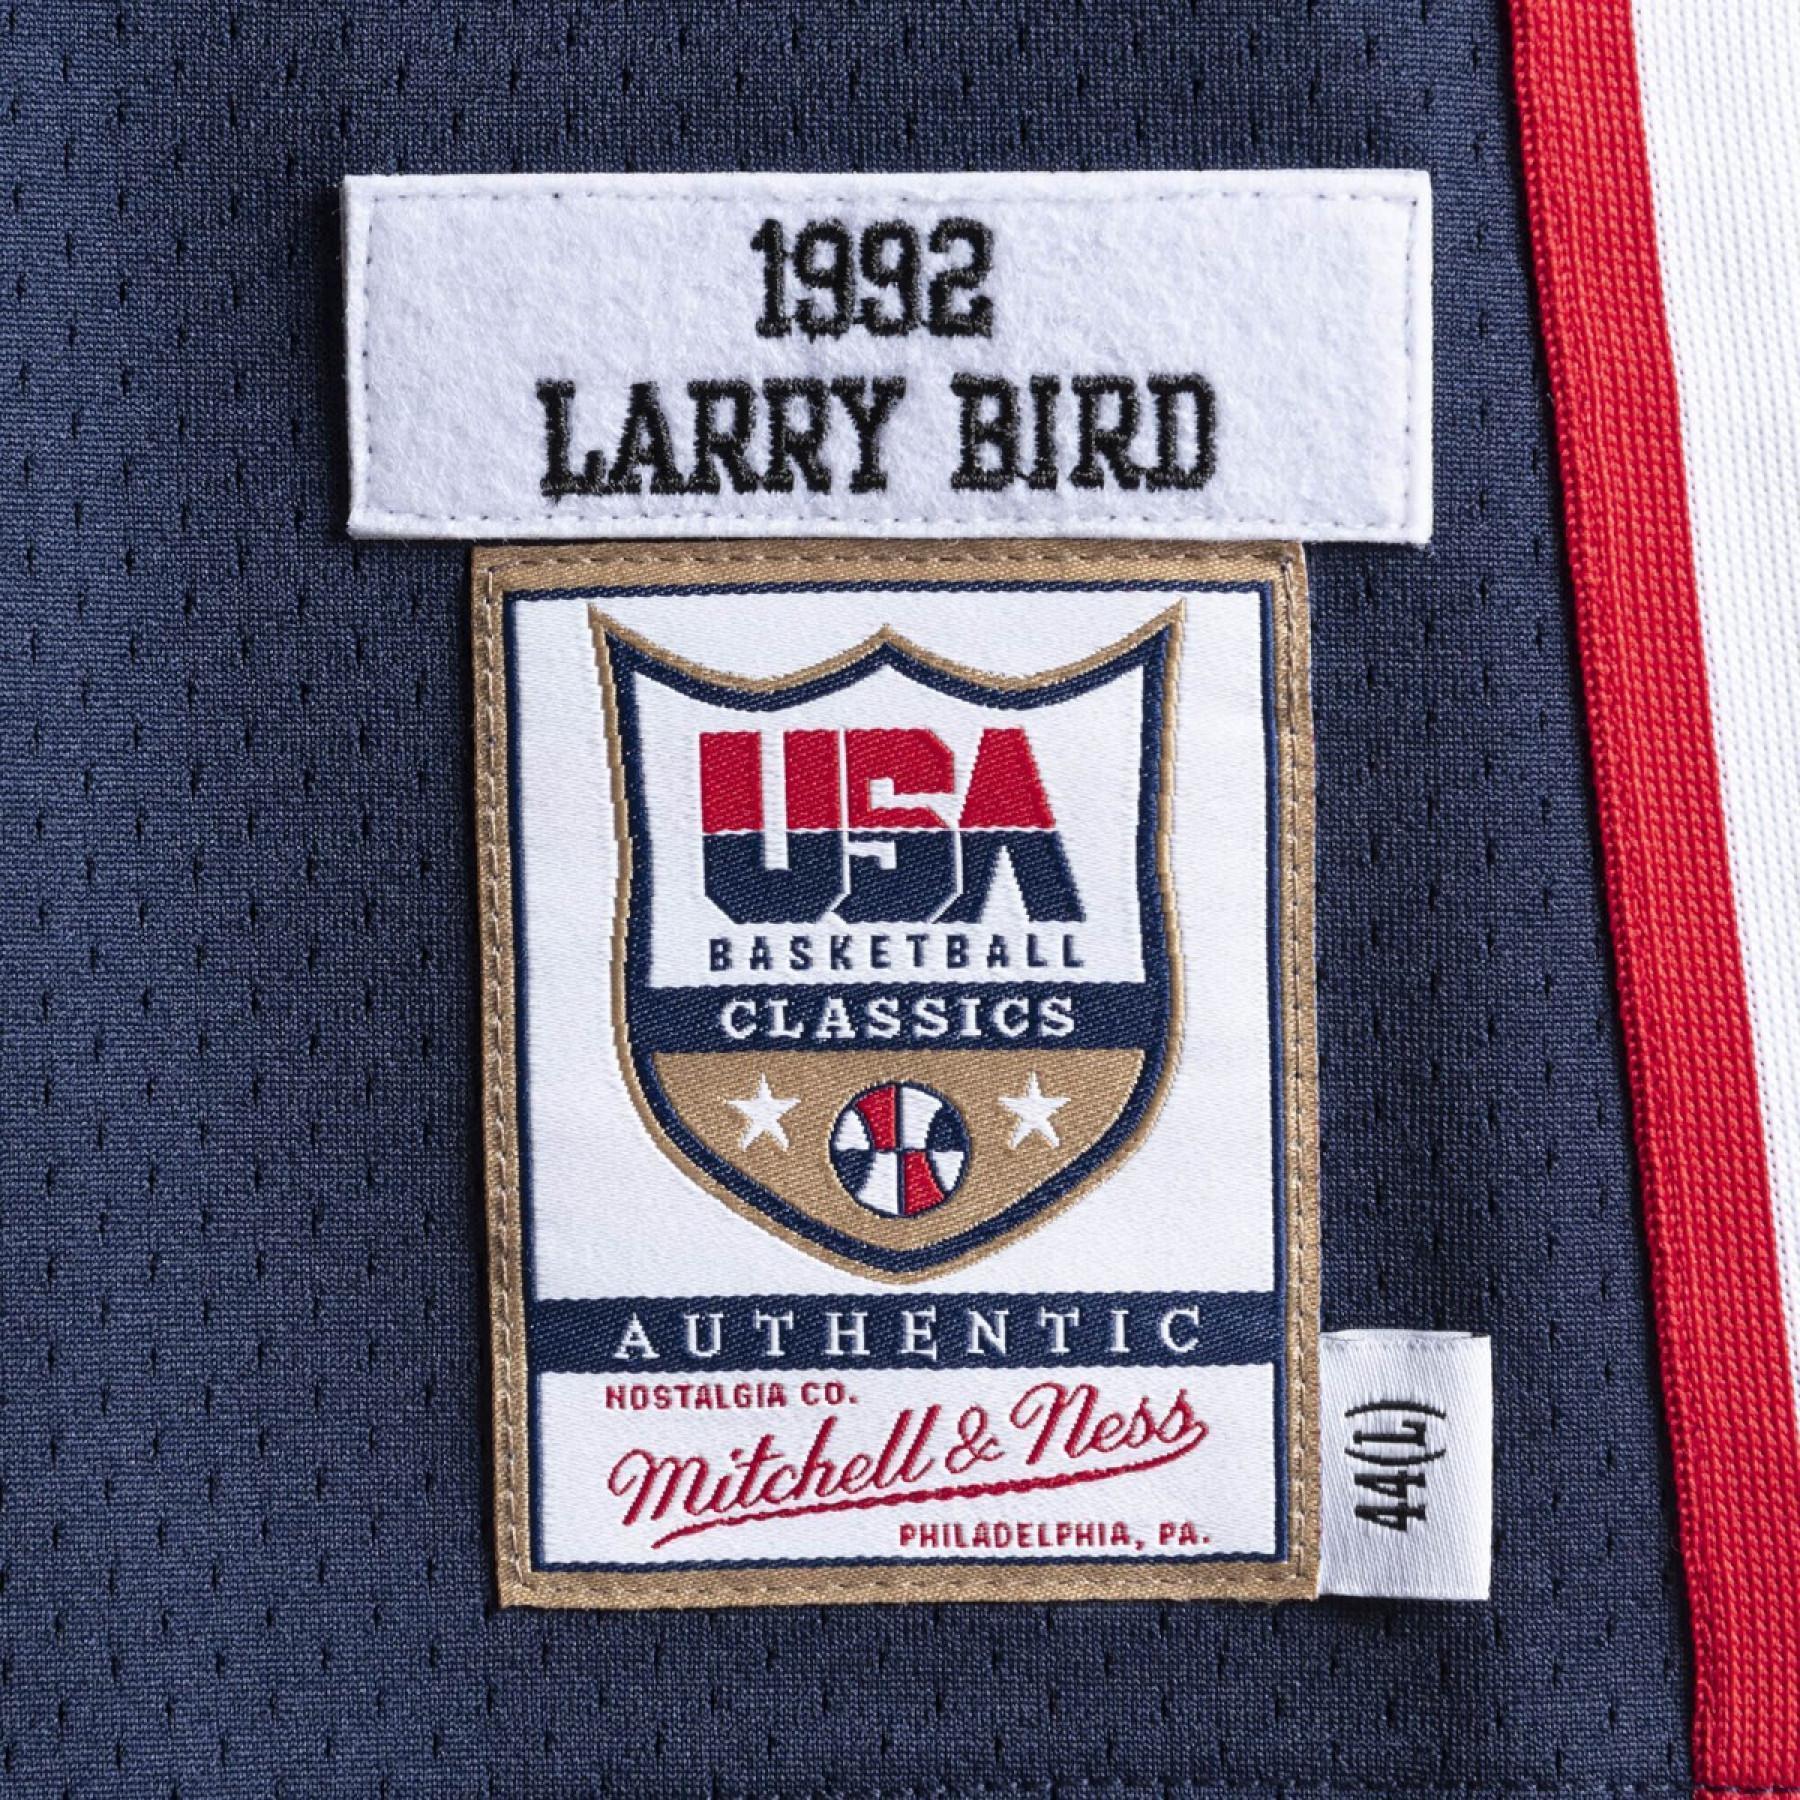 Authentiek teamshirt USA nba Larry Bird